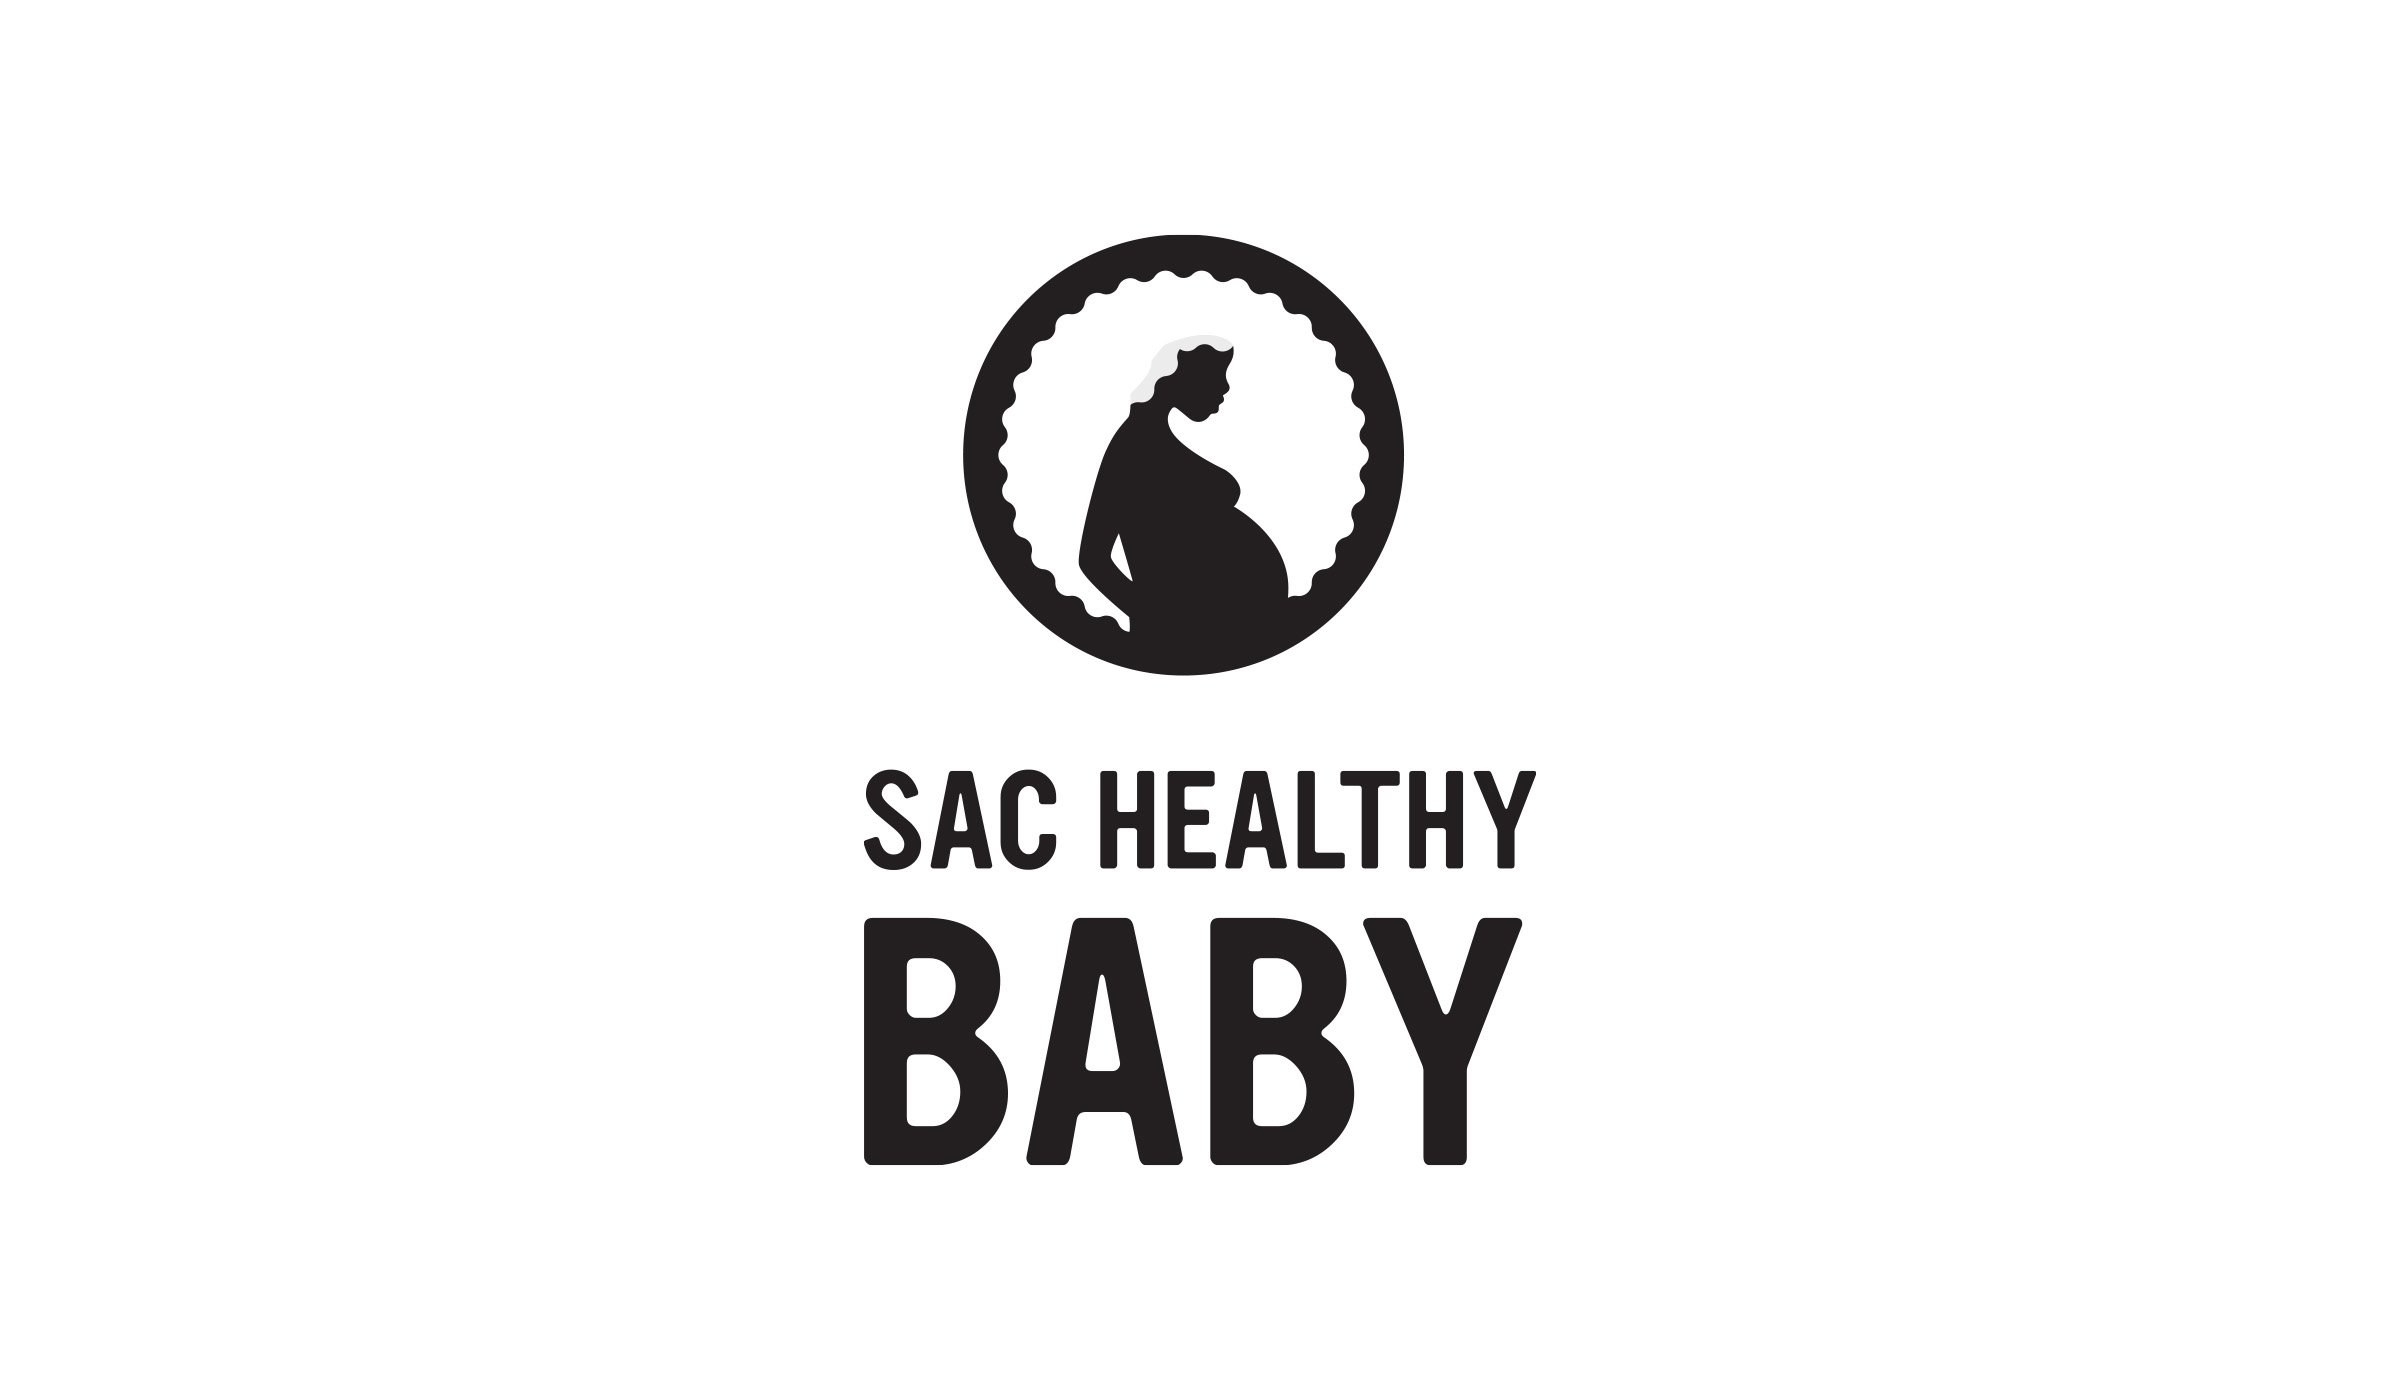 Sac Healthy Baby.jpg